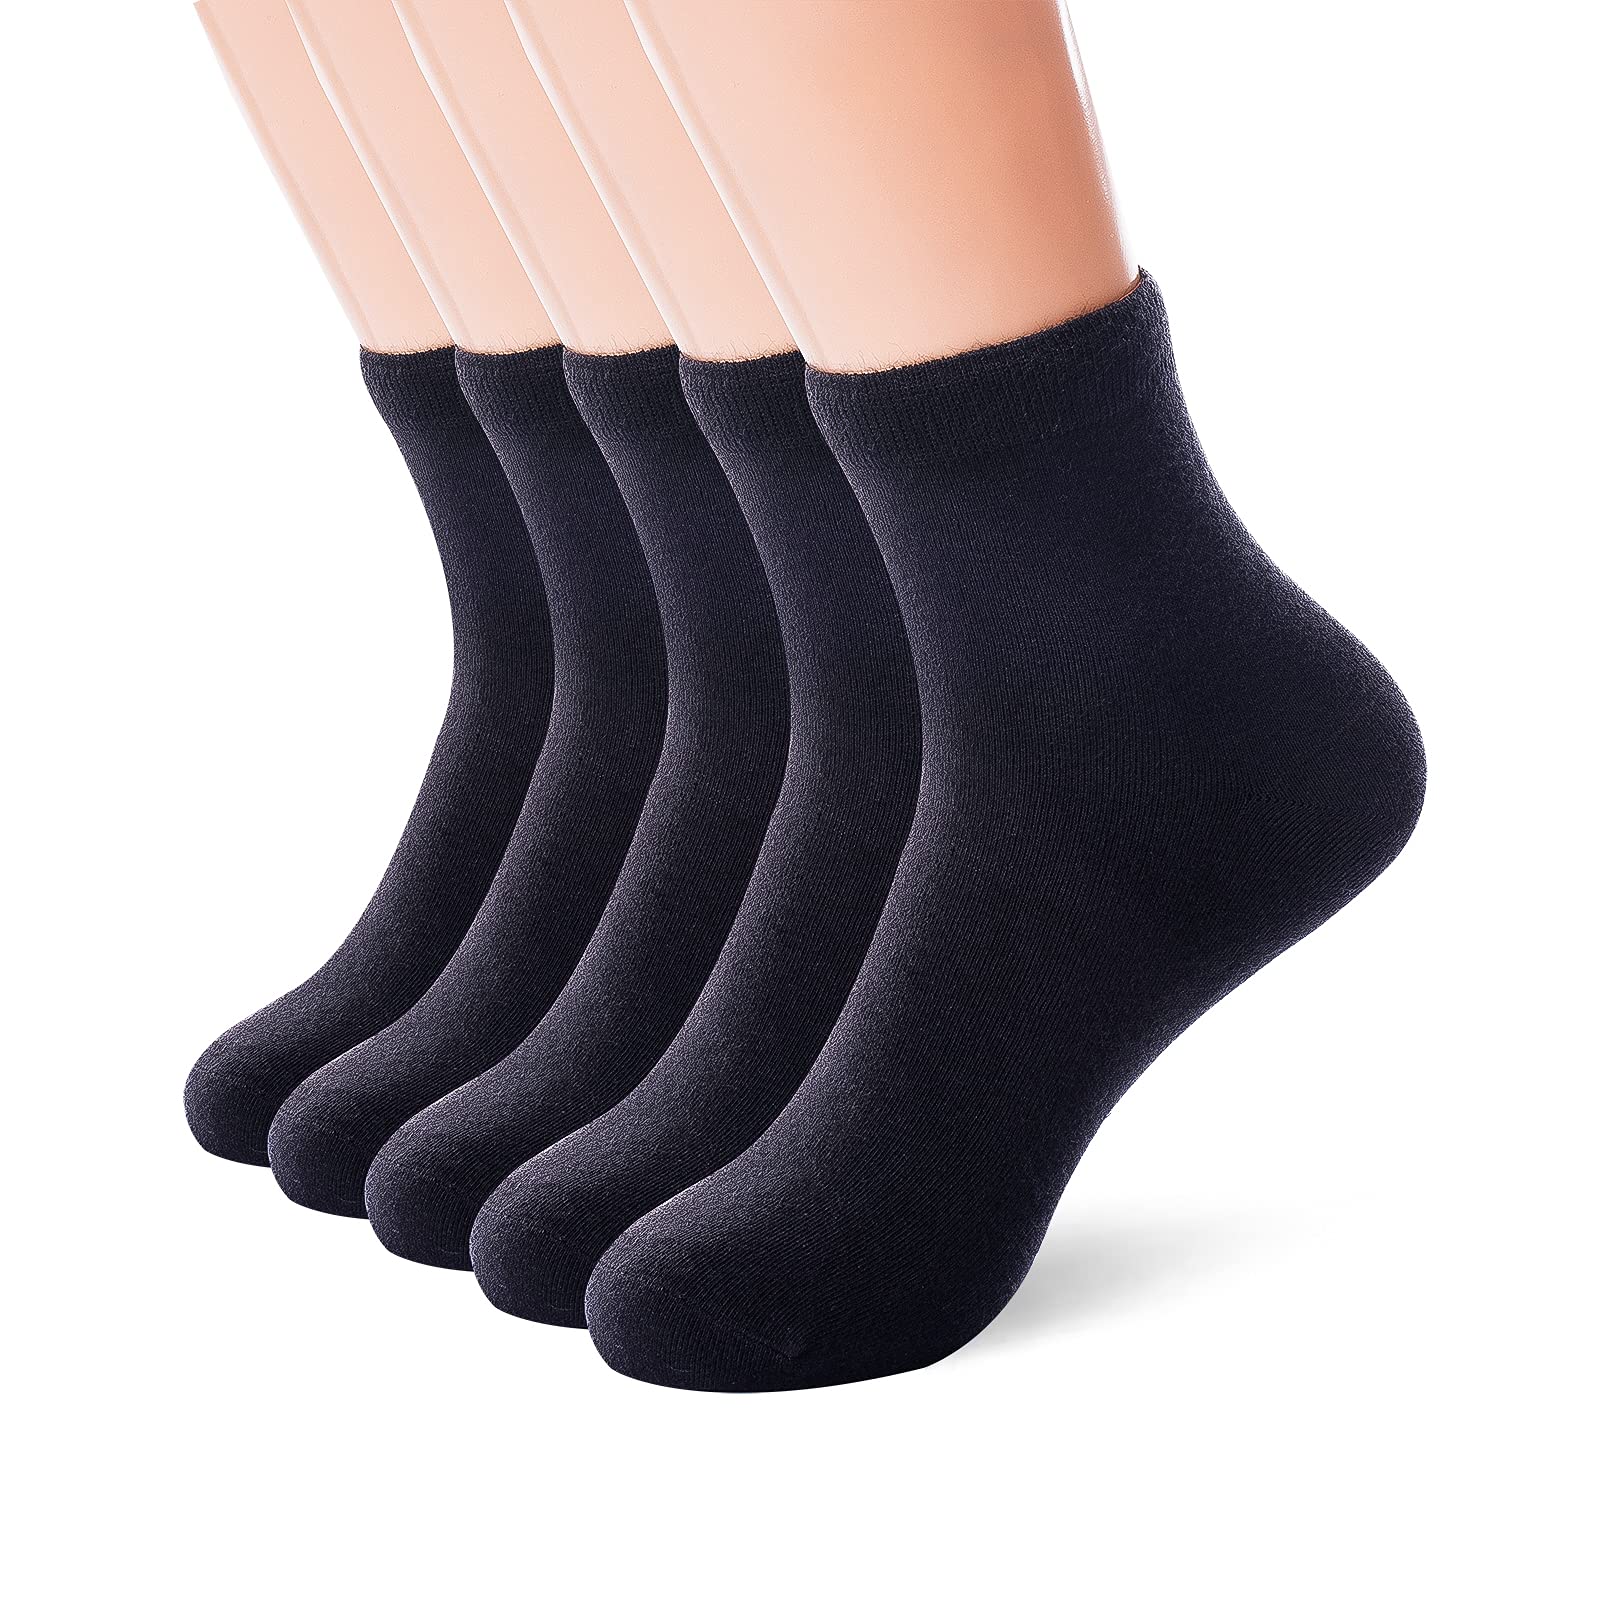 JEEDMNO Women Thin Cotton Socks, Soft Cotton Socks Women Ankle Quarter Cut Socks 5/10/25 Pairs (Shoe Size 6-11, Black (5 Pairs))